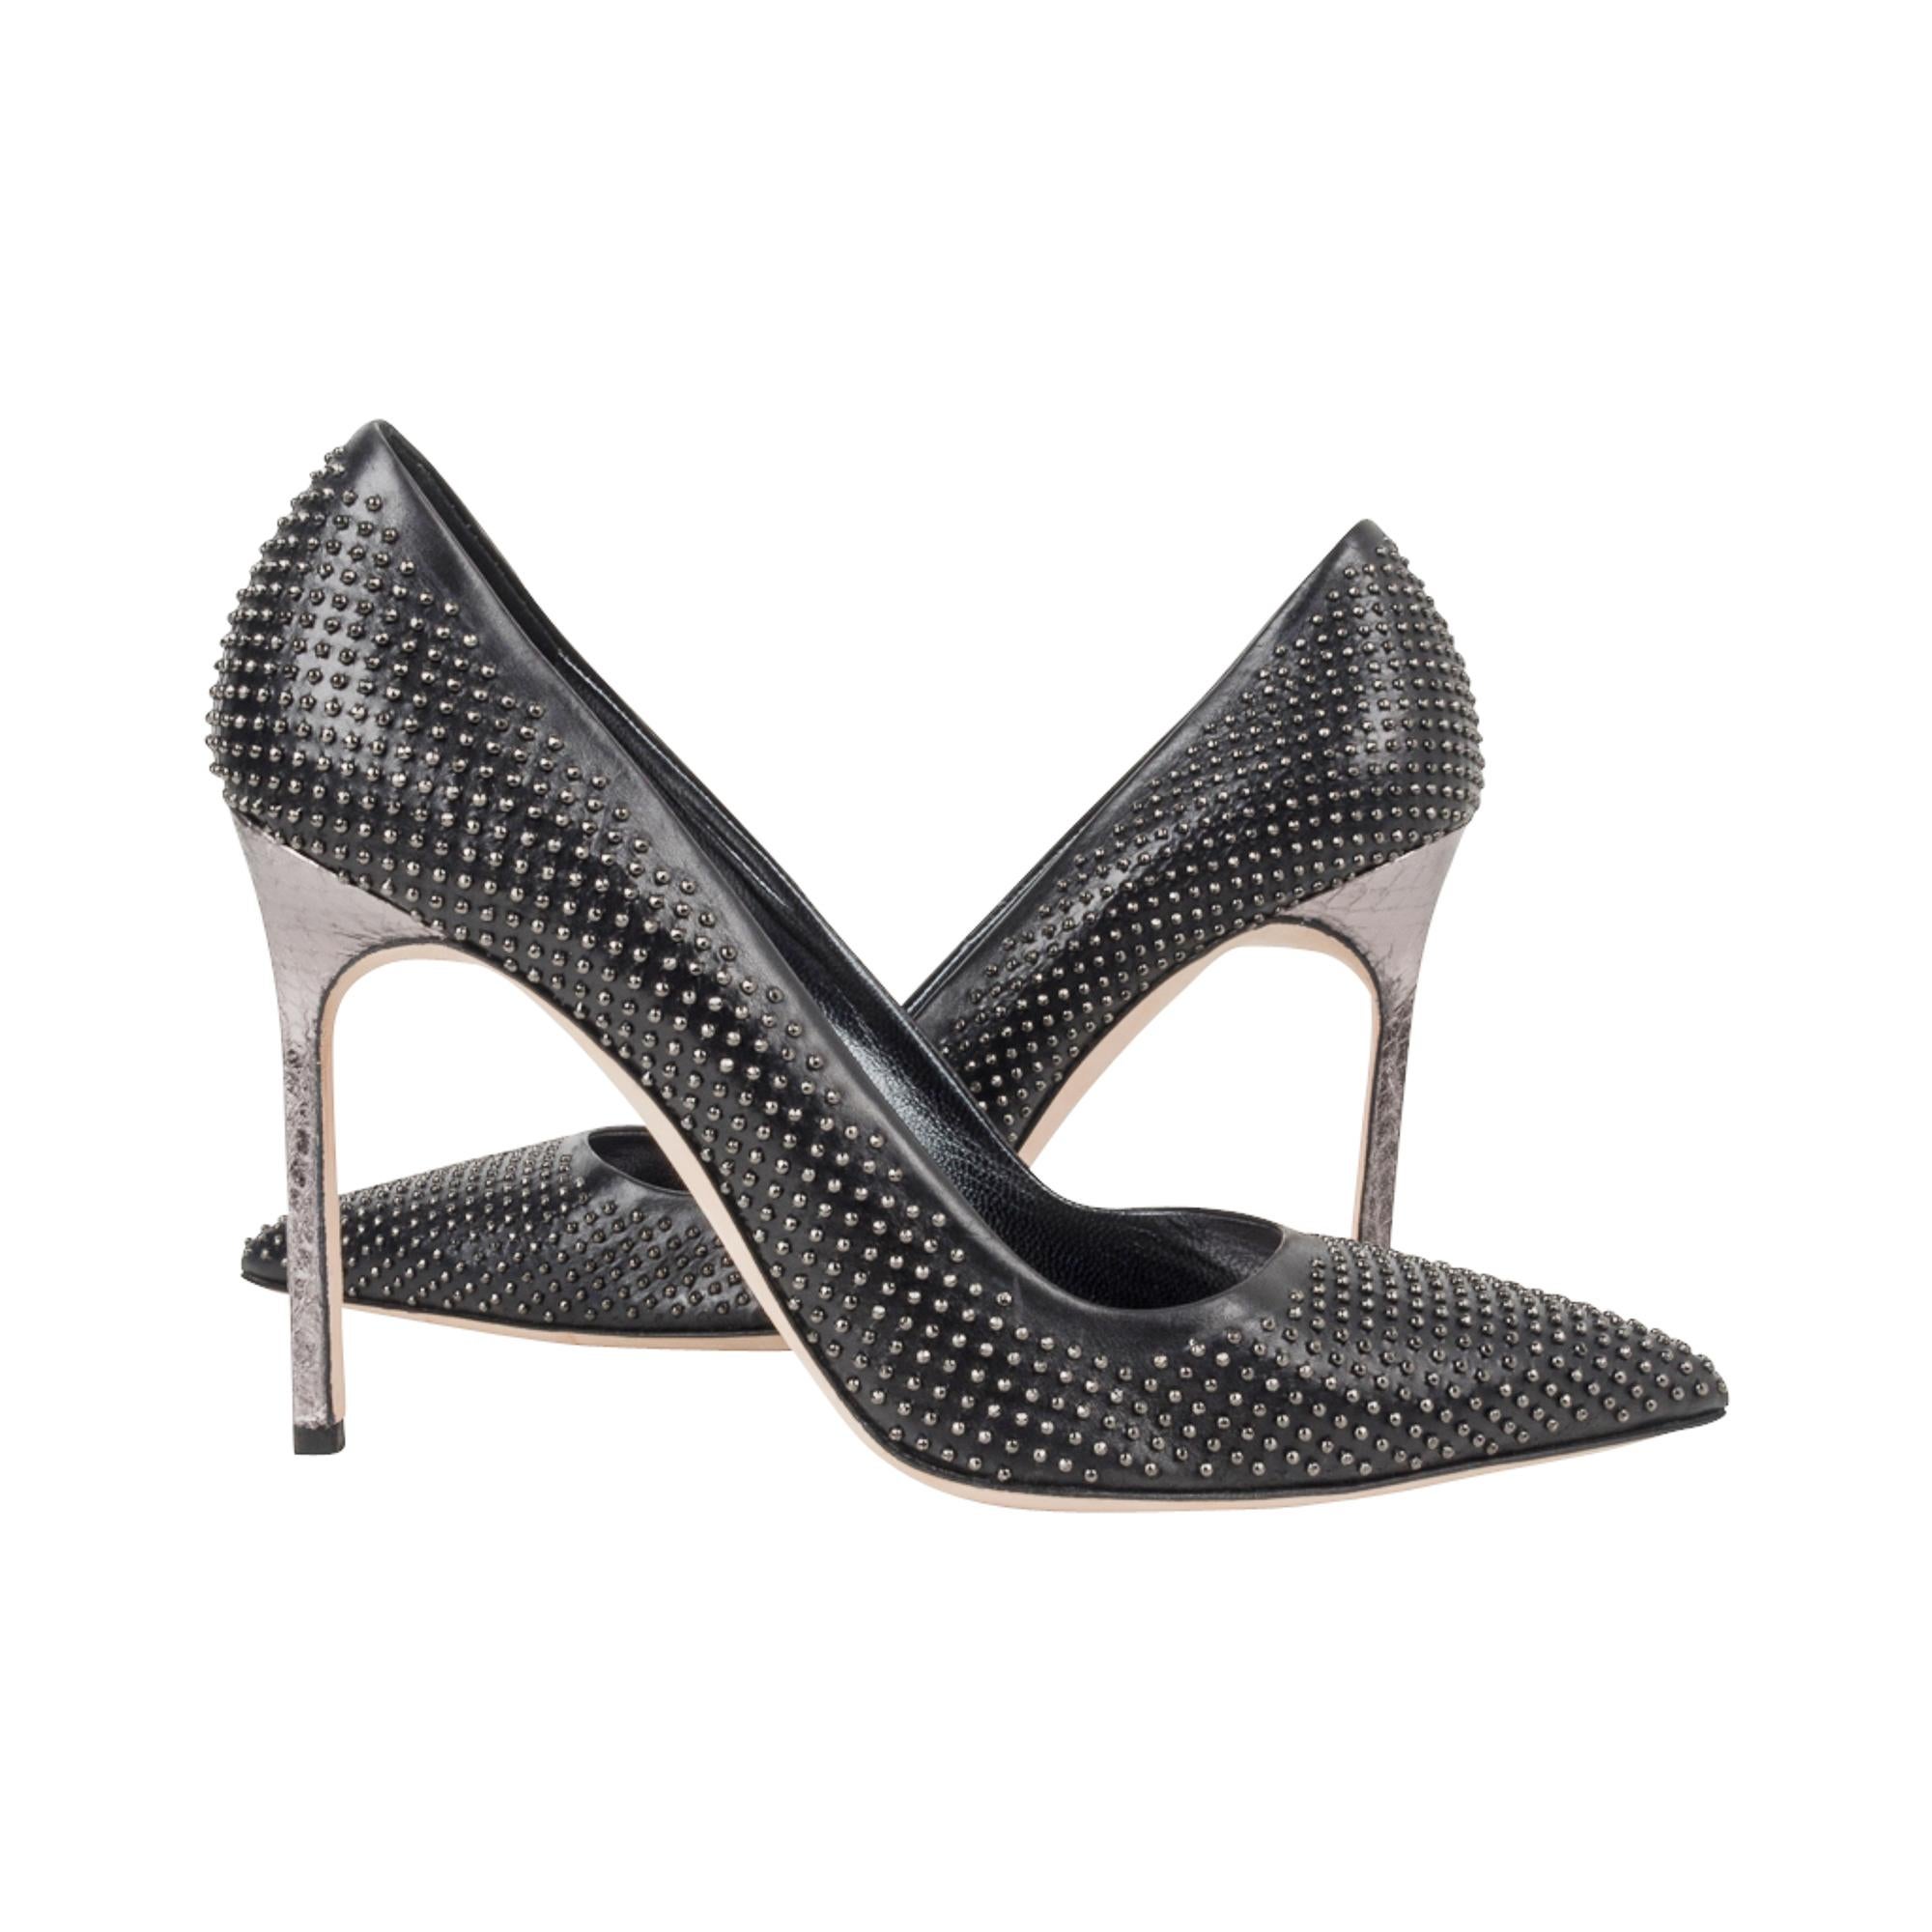 Manolo Blahnik Shoe Black Small Studs Silver Heel 39 / 9 New In New Condition For Sale In Miami, FL